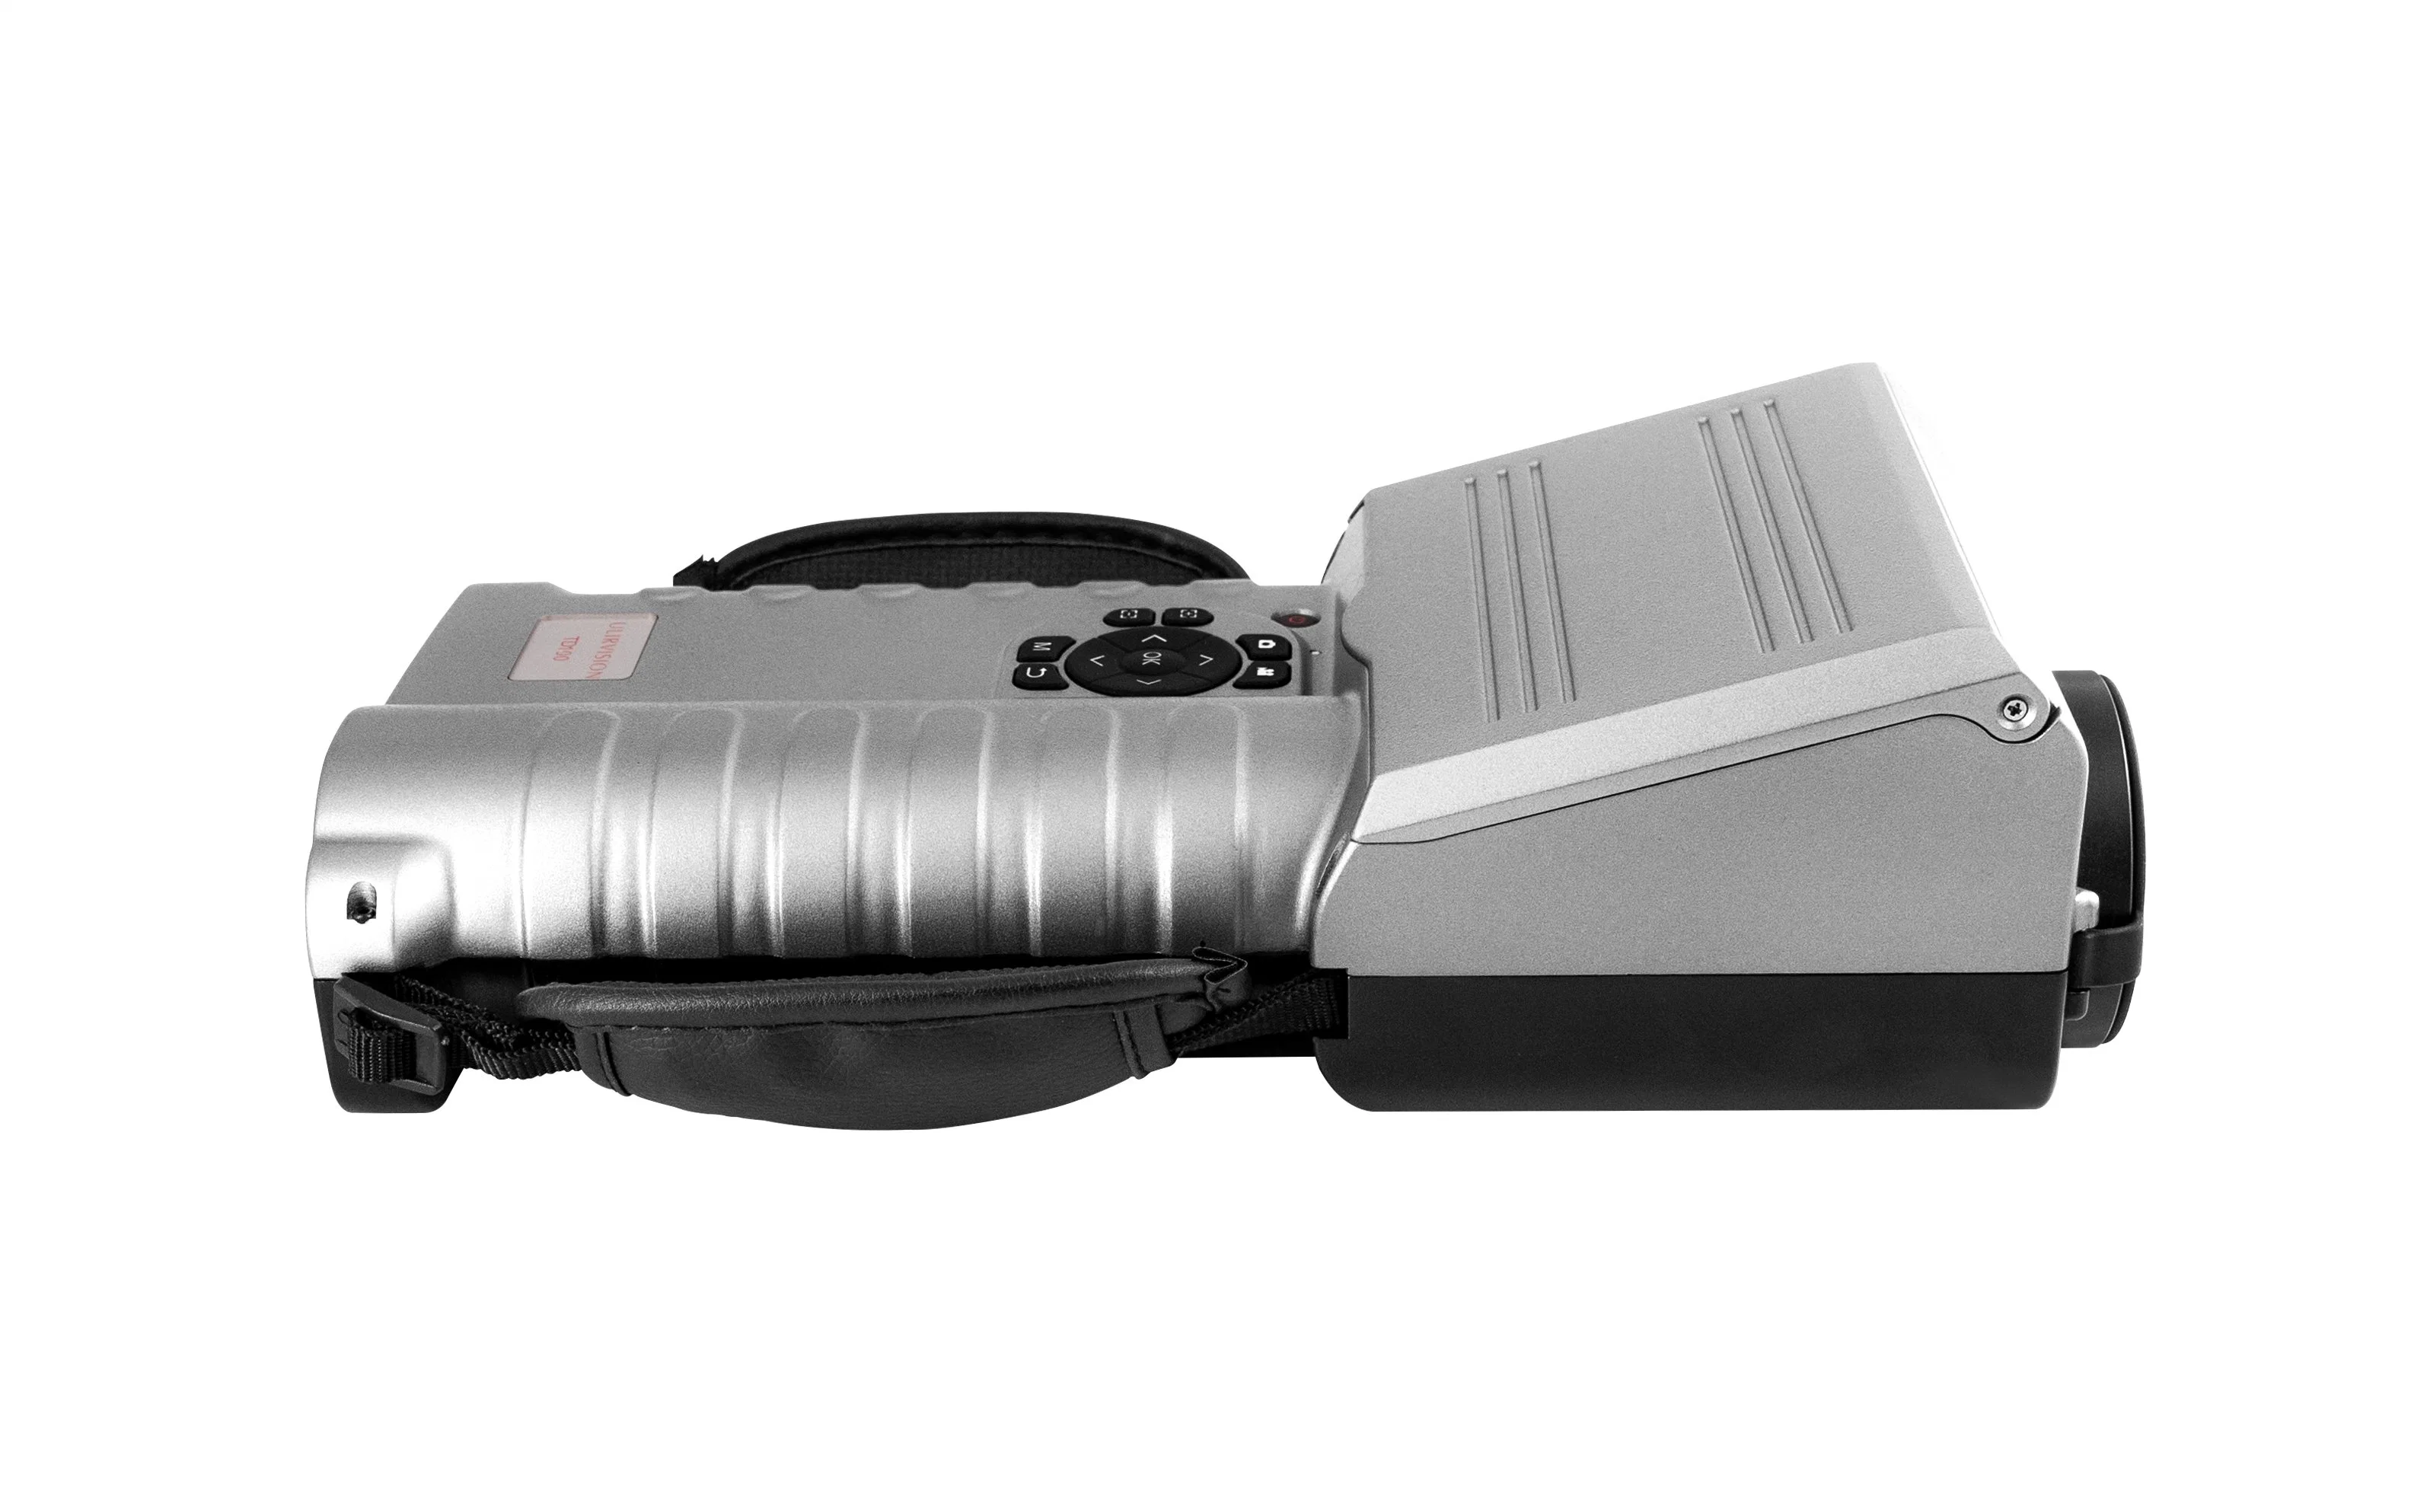 Ulirvision Good Quality Corona Camera Detect UV Emission Powerful Tool